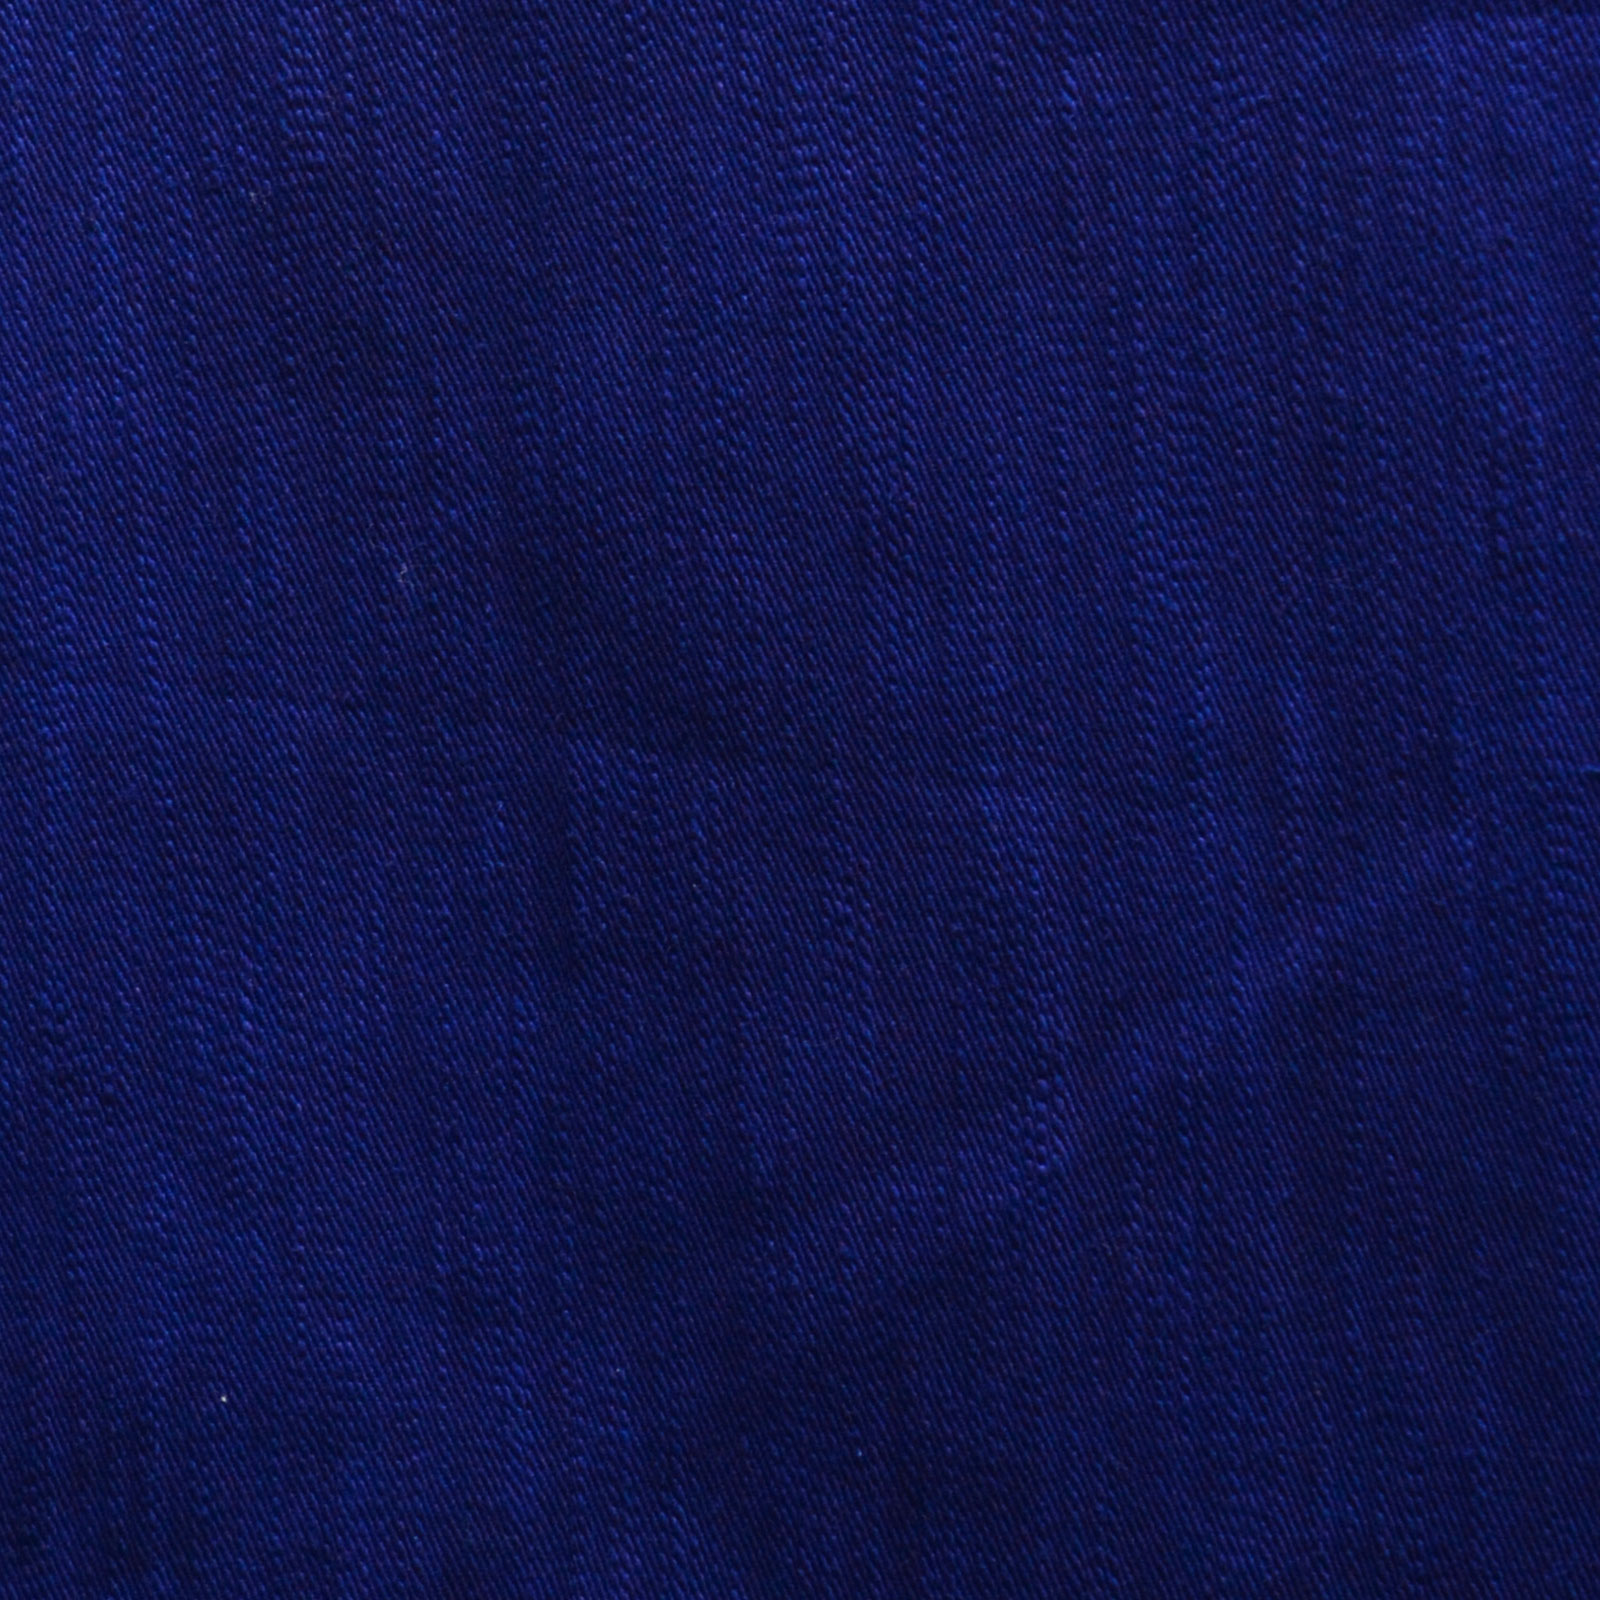 Ecofriendly Handwoven SelvedgeDenim - 9.0 Oz - Space Blue - Natural Indigo (Fabric Dyed)-MWKD-FBD-1010-SPB-NI